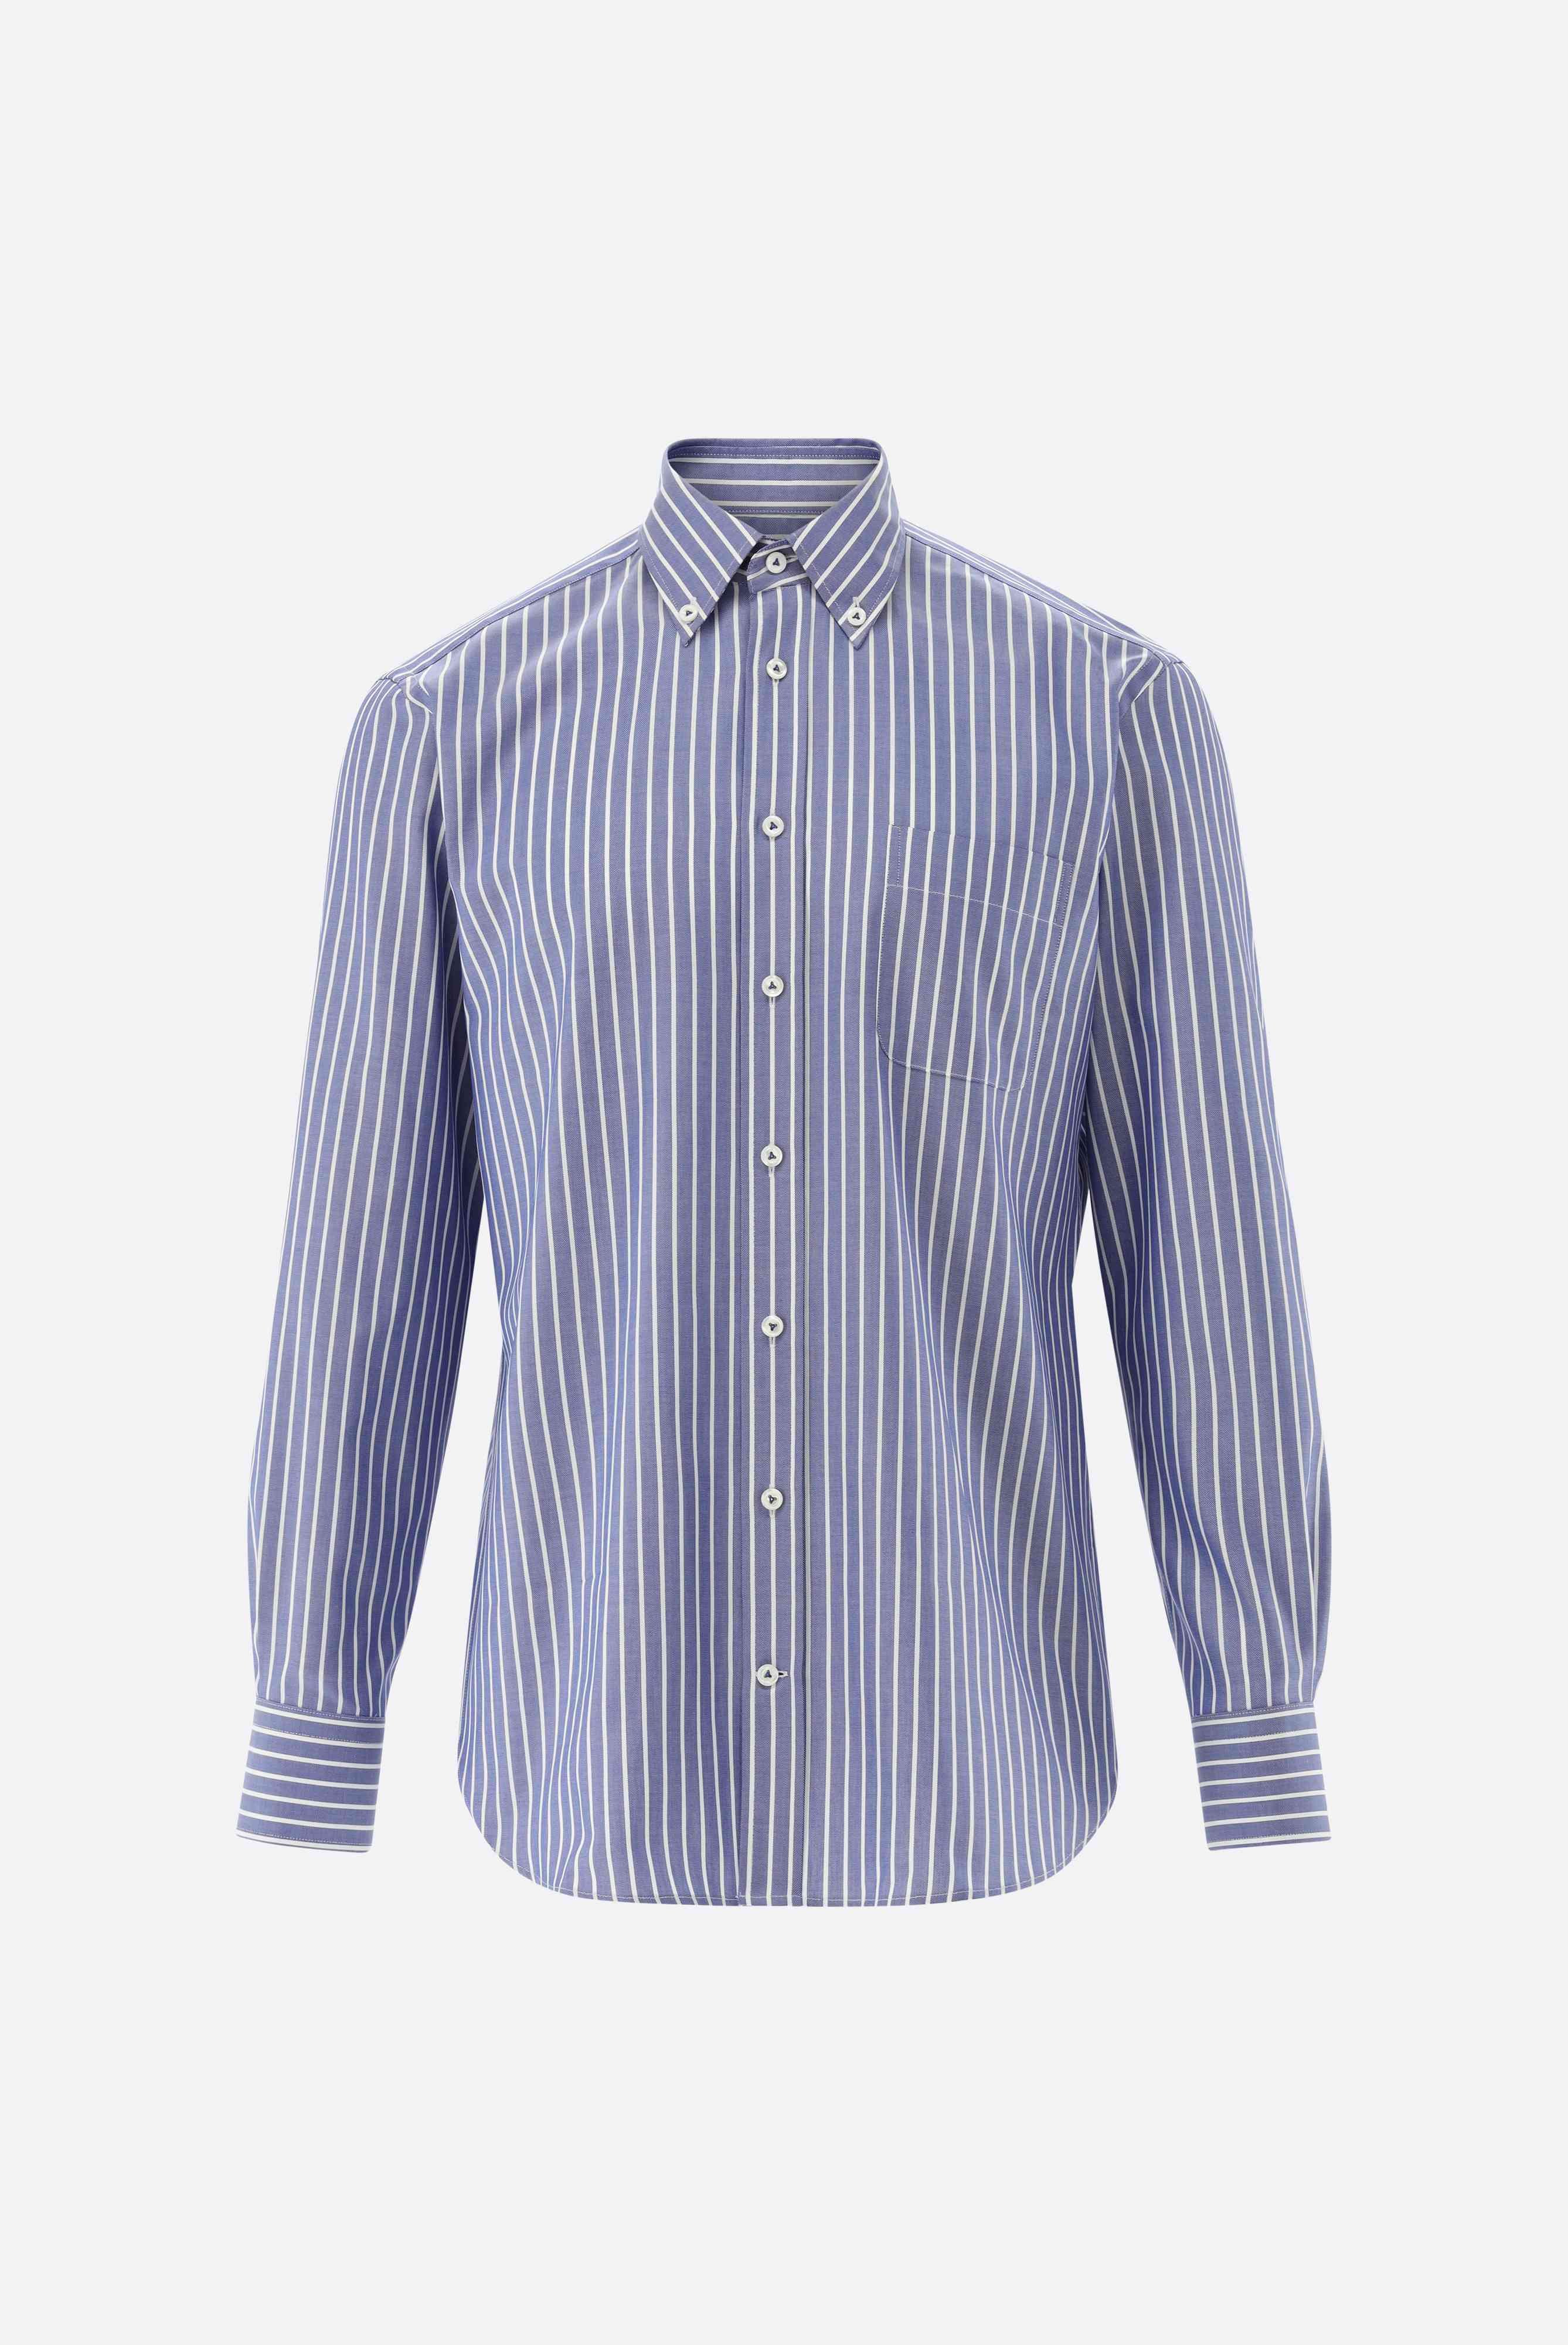 Casual Shirts+Striped Oxford Shirt Comfort Fit+20.2026.AV.151956.770.39